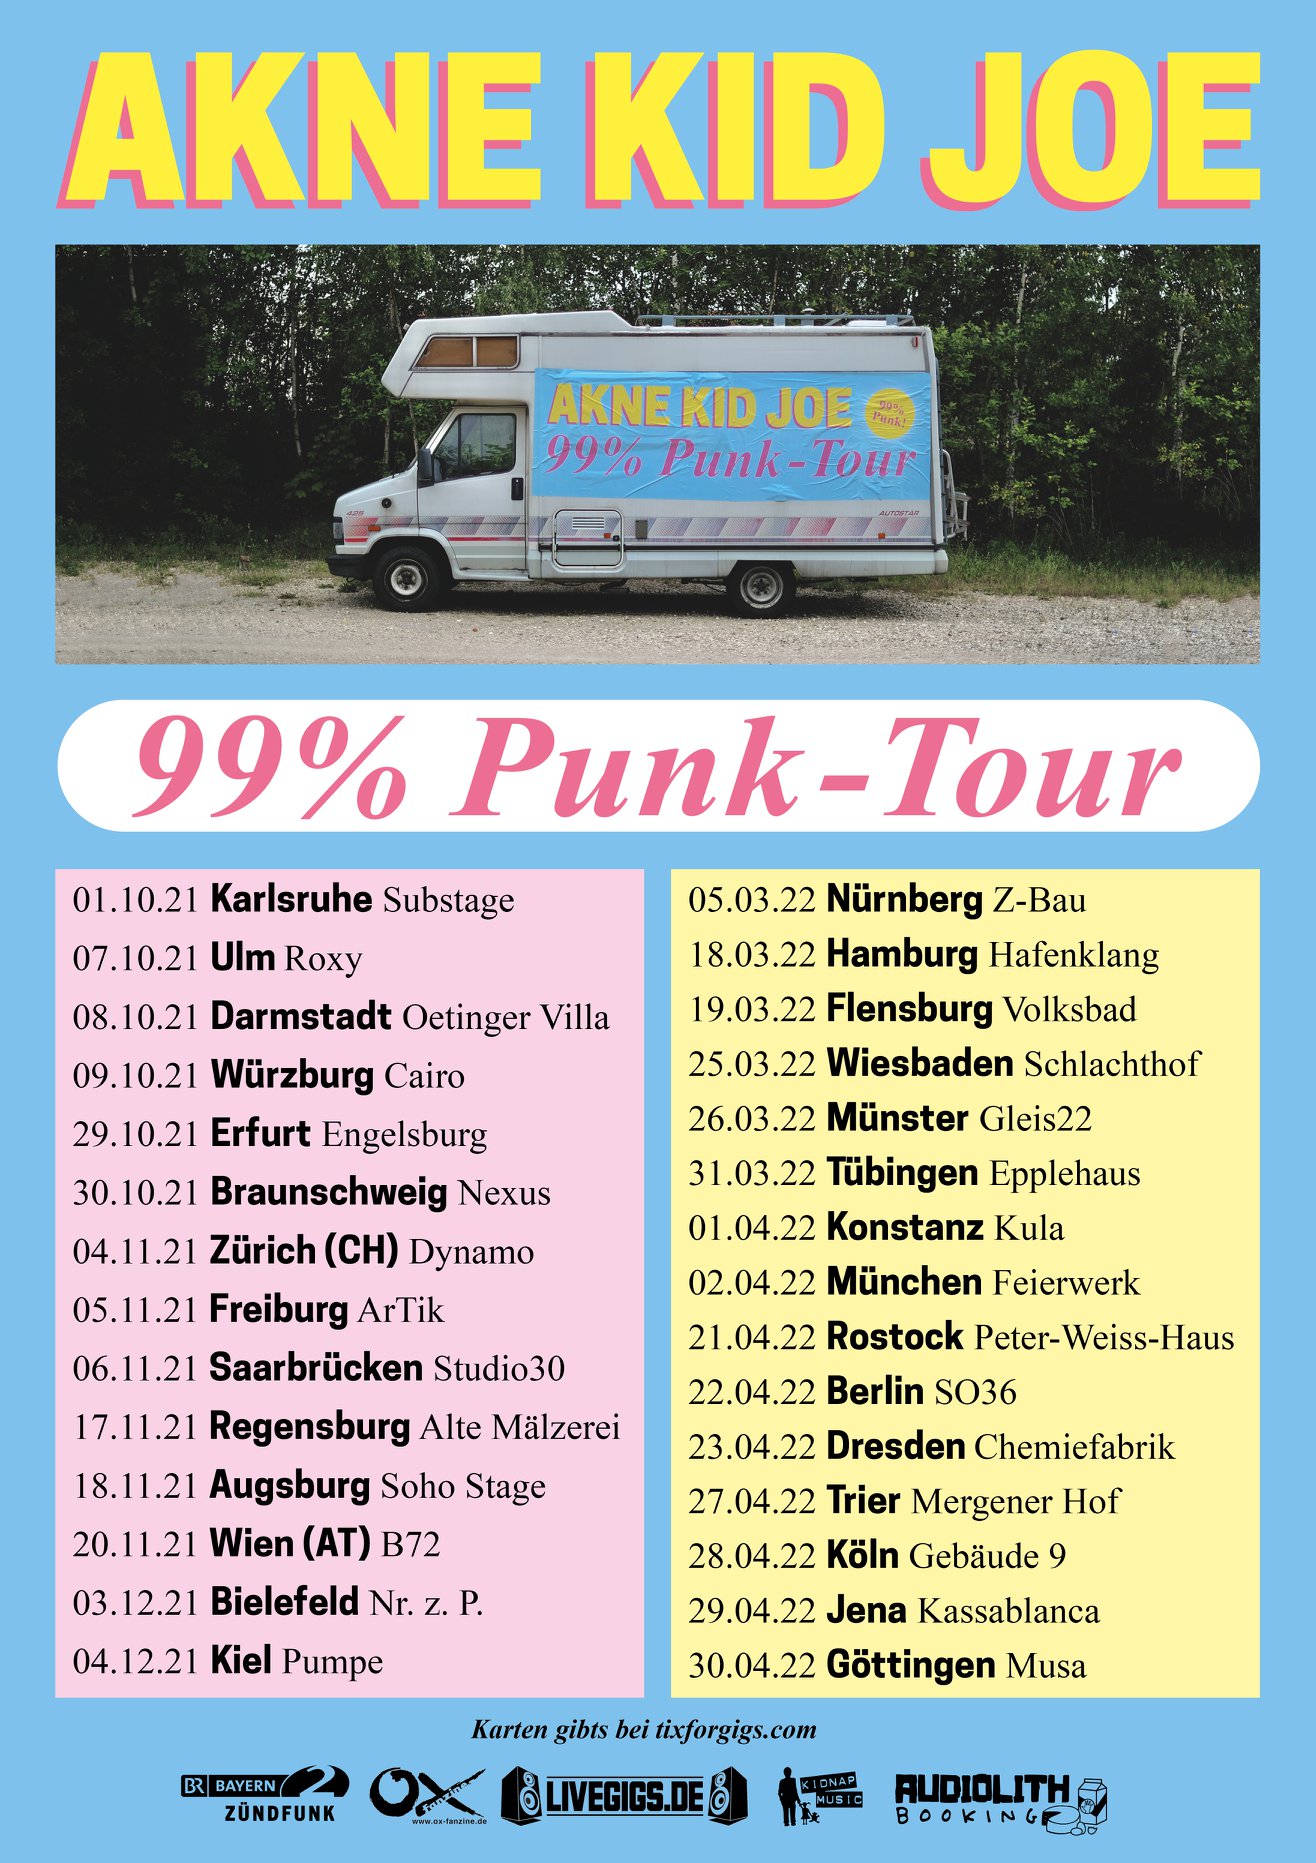 Akne Kid Joe - "99% Punk"-Tour